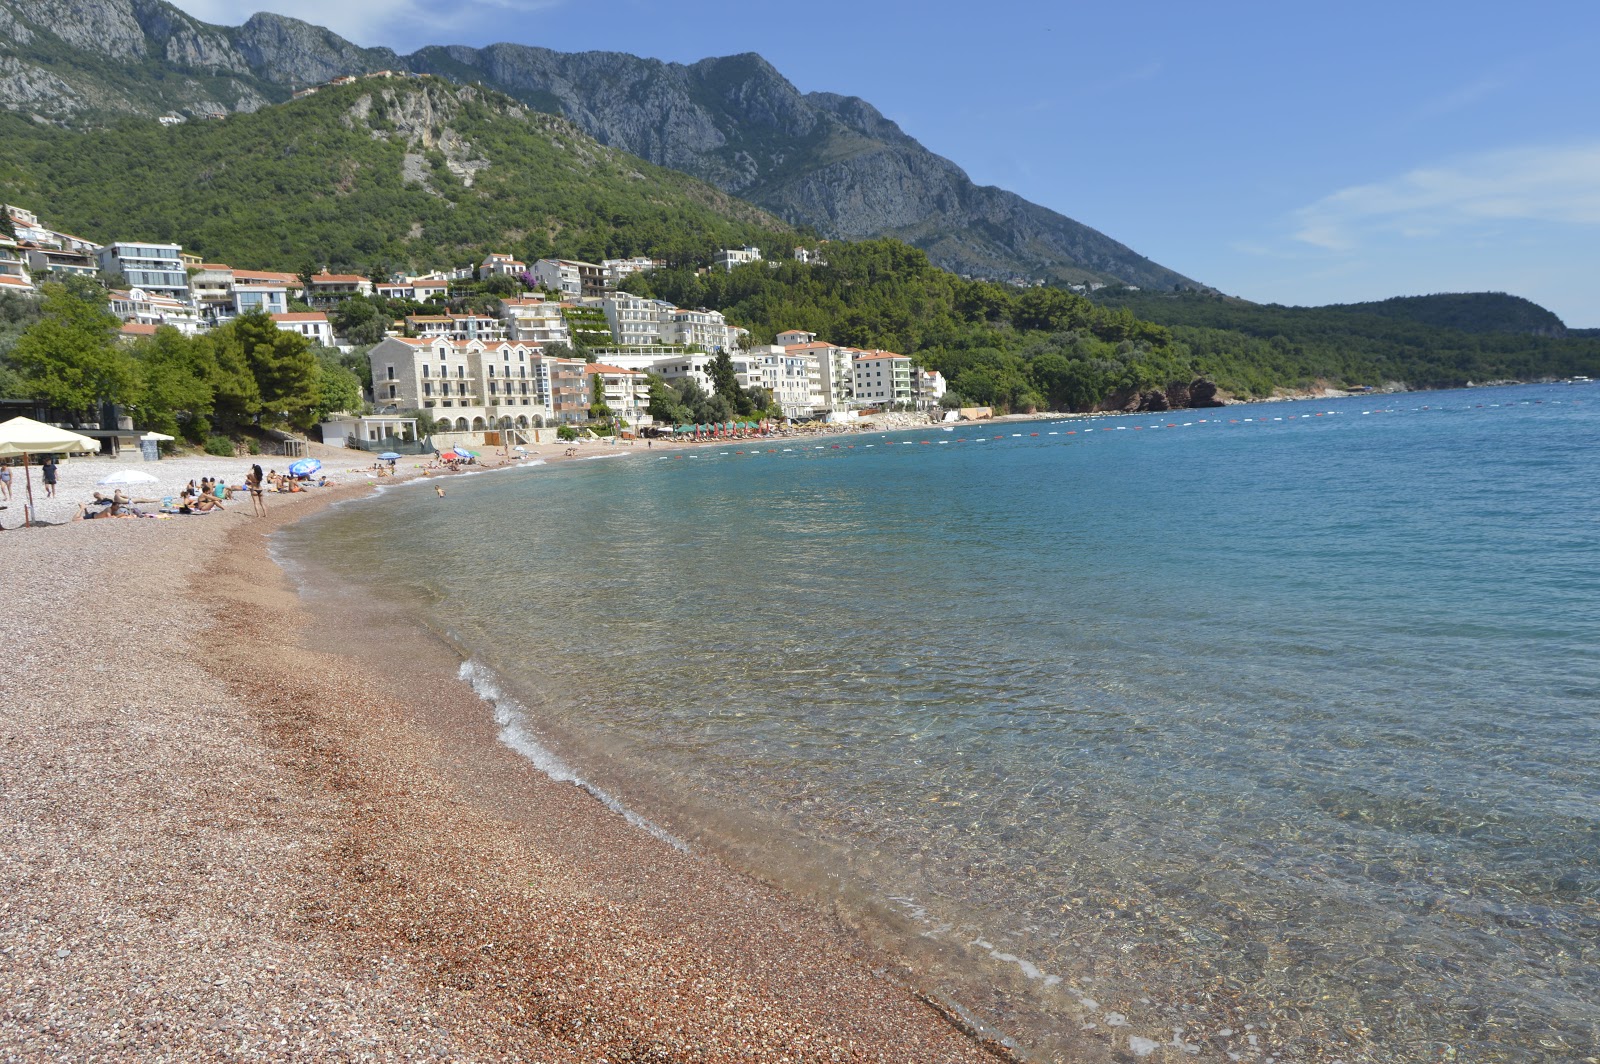 Fotografie cu Sveti Stefan beach - locul popular printre cunoscătorii de relaxare